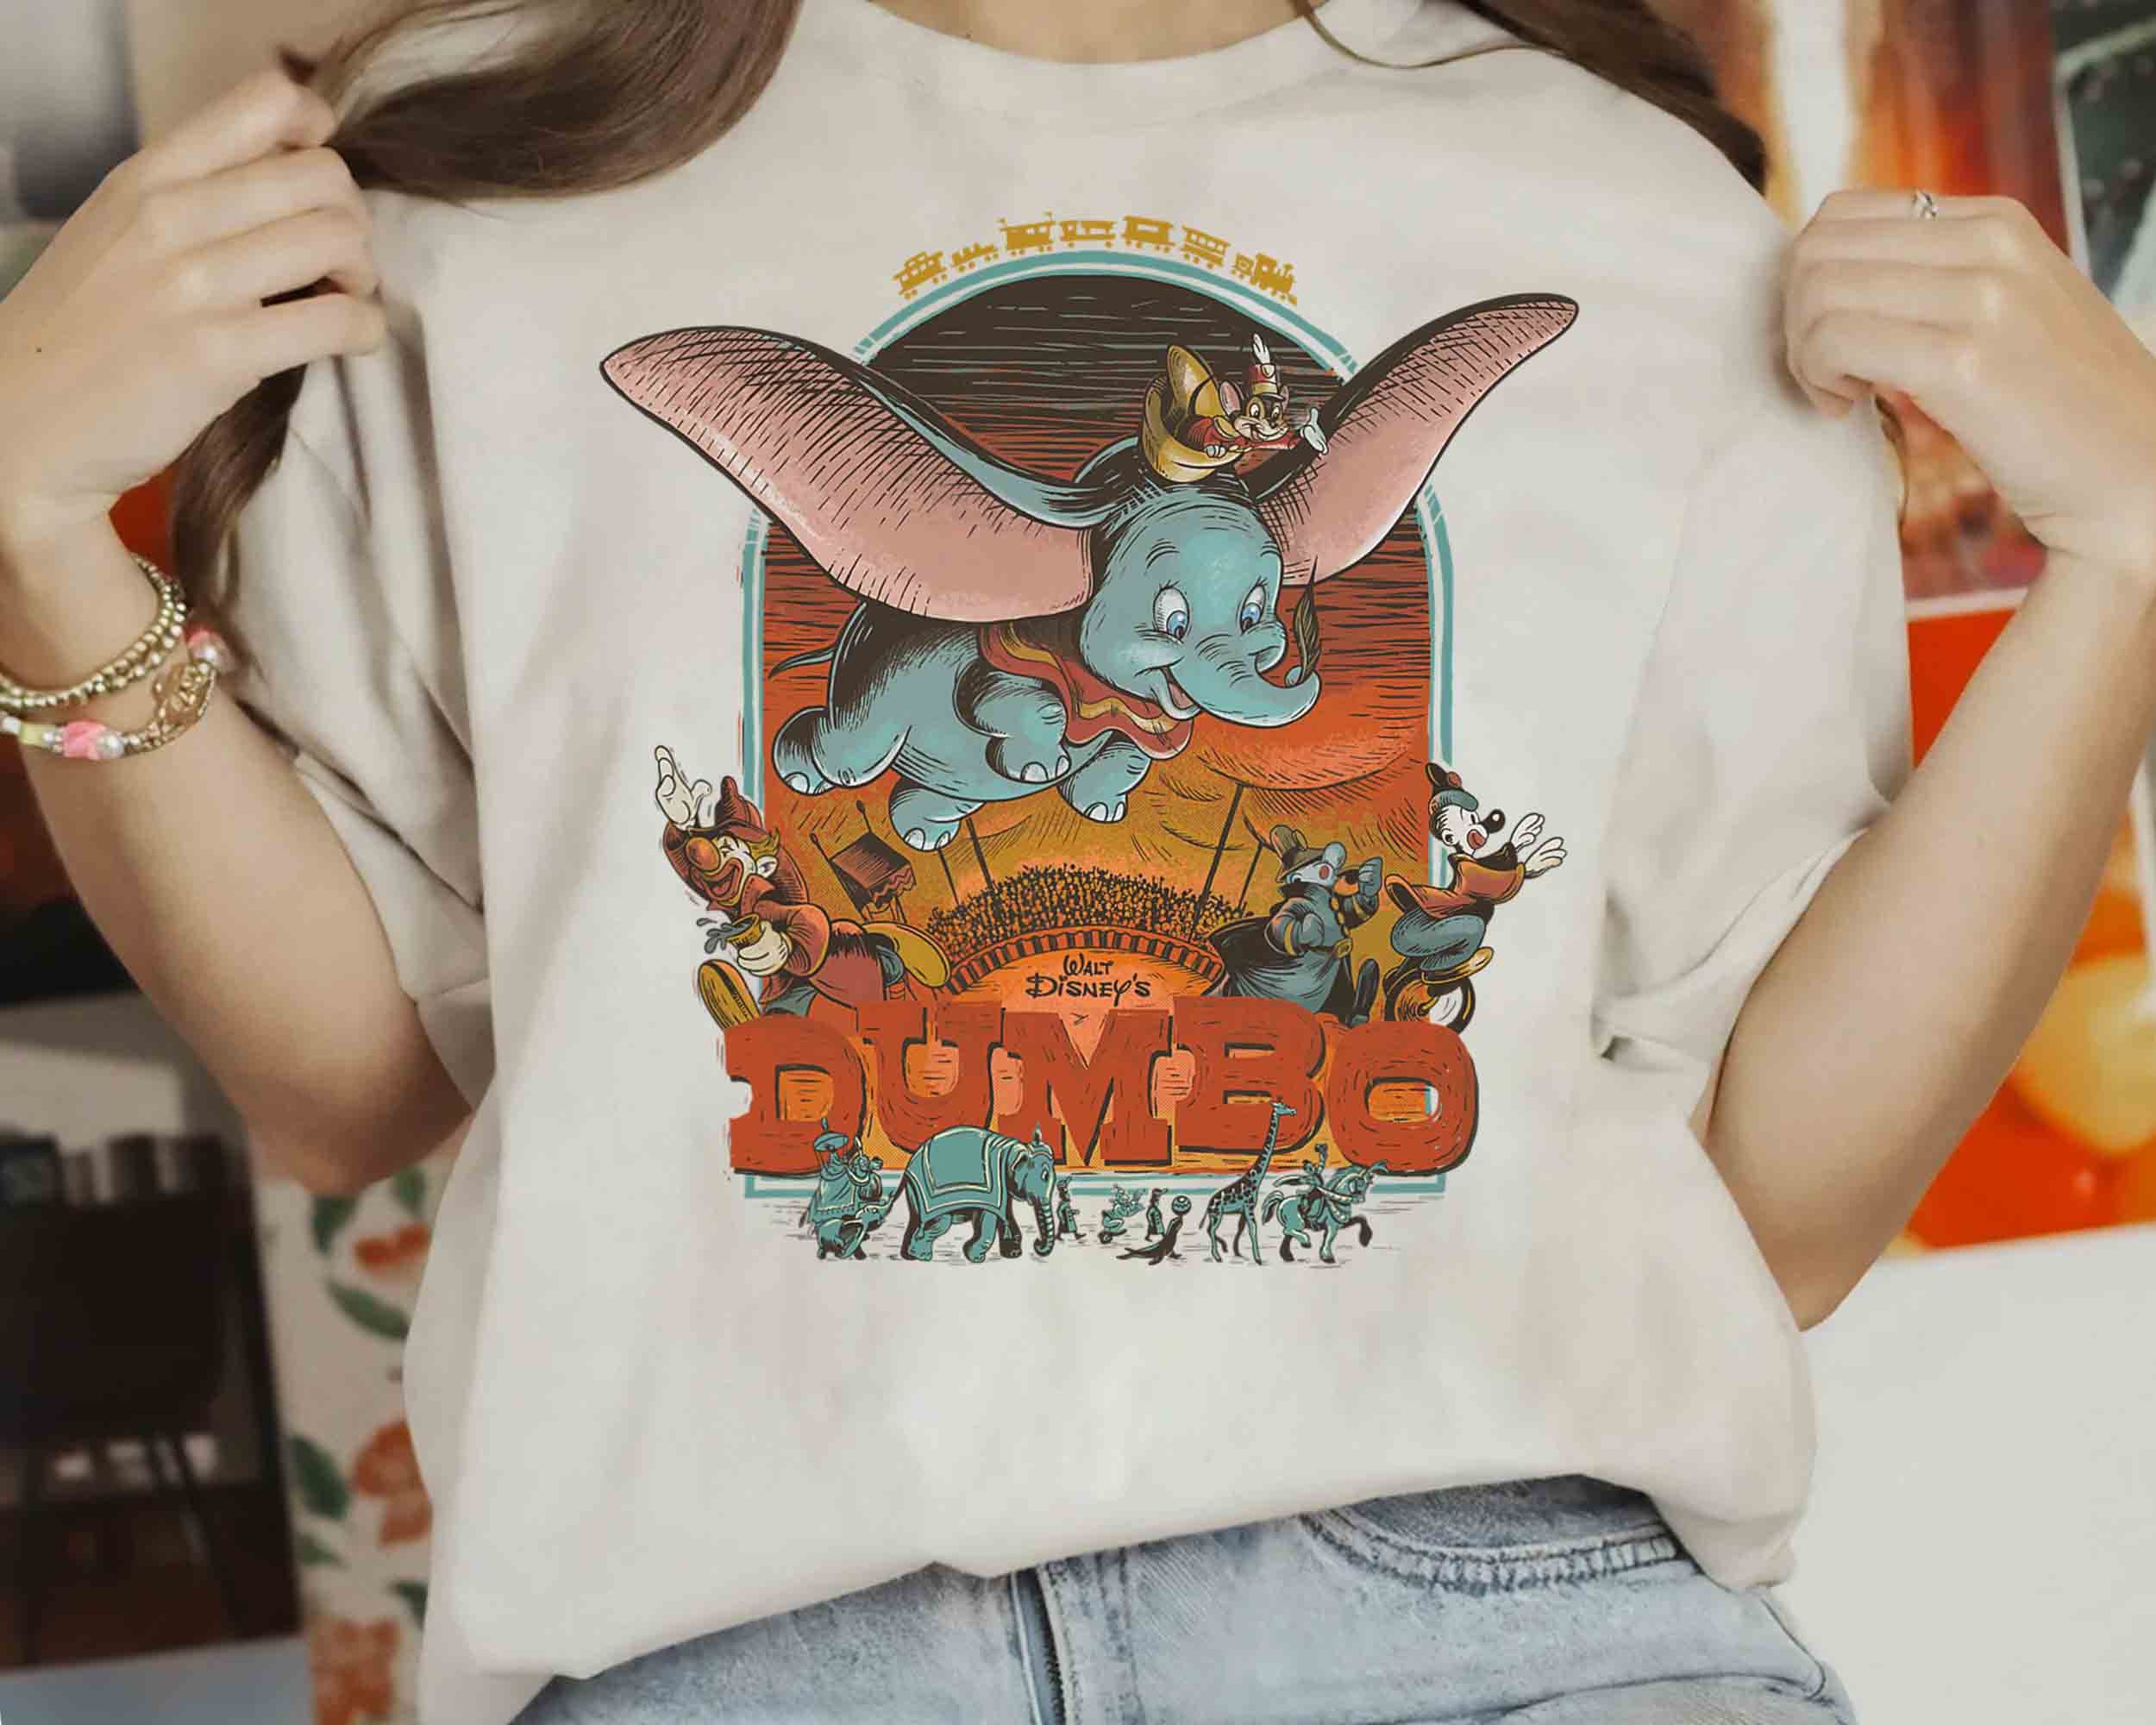 ARTESANIA CERDA Women's Disney Dumbo Sweatshirt, Grey (Grey 13), M